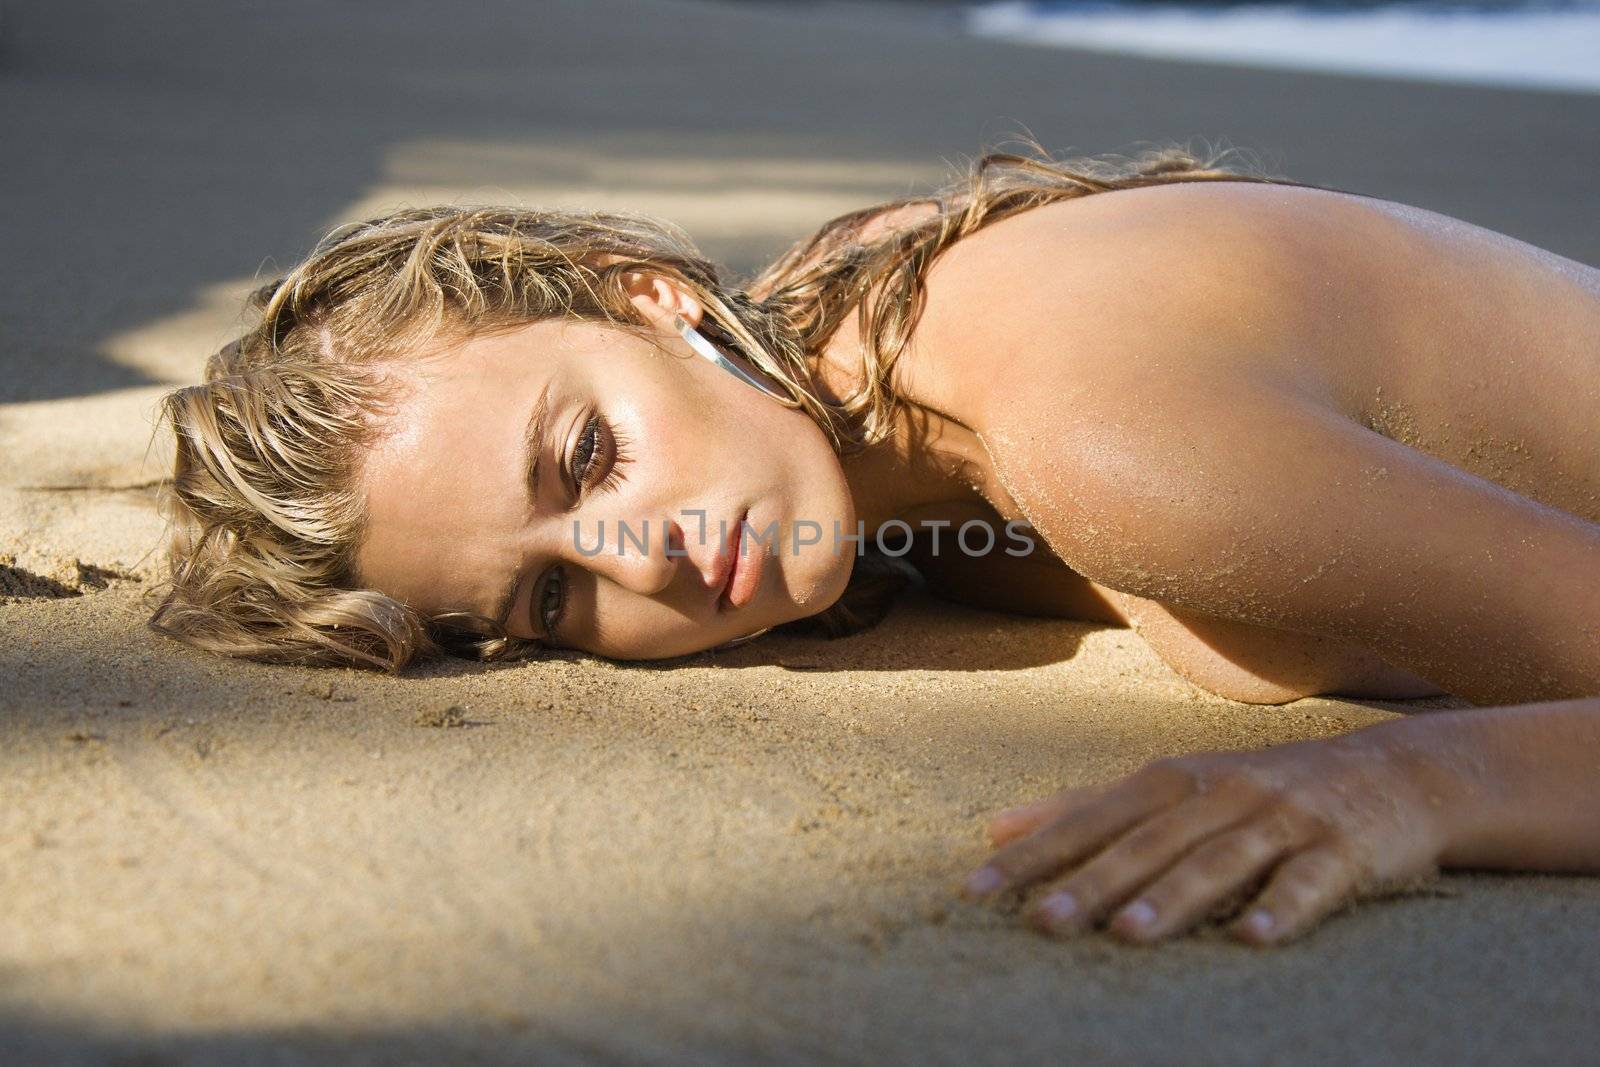 Bare Caucasian blond woman lying on sand on Maui, Hawaii beach.